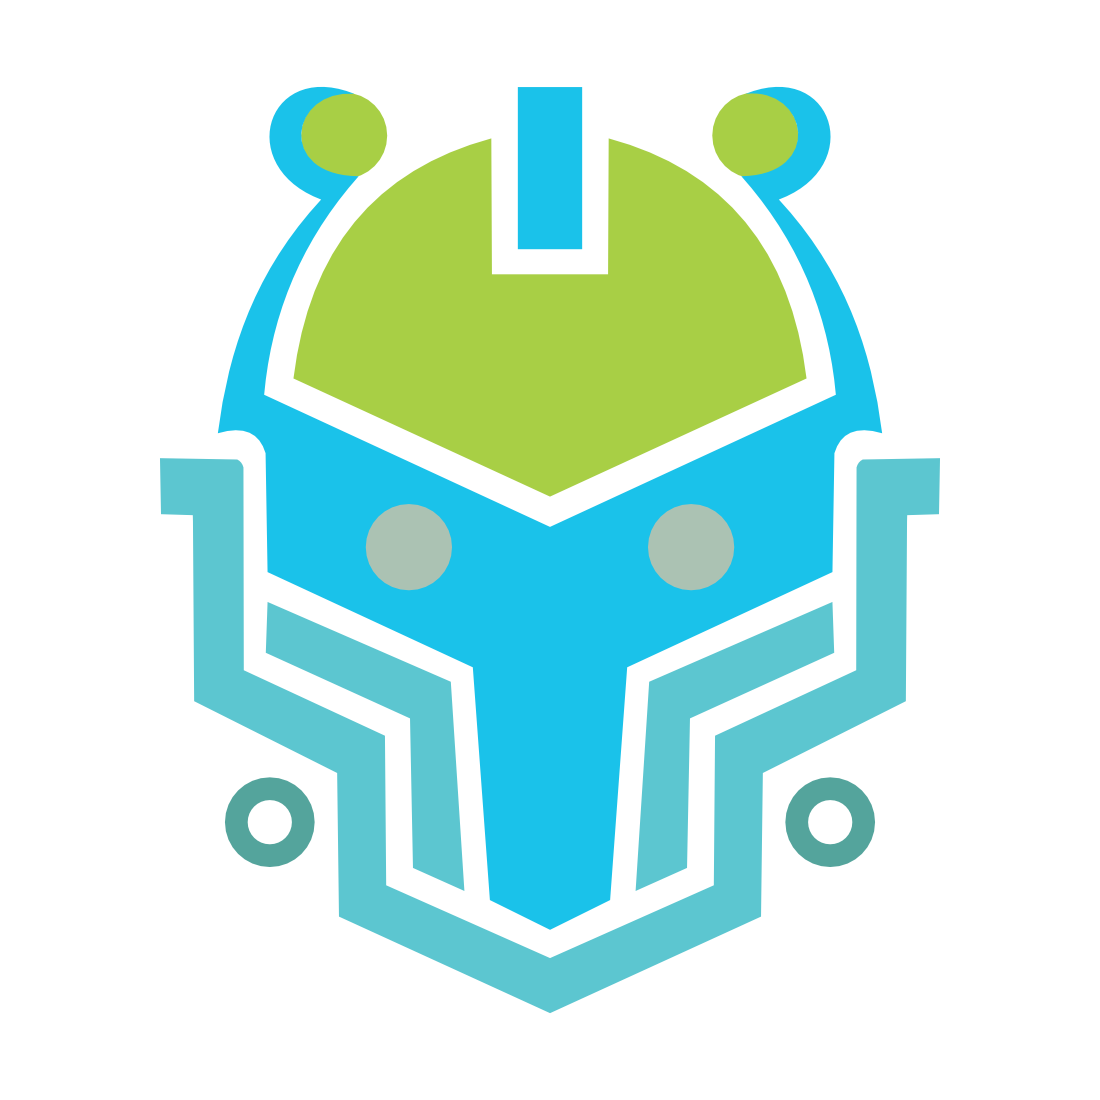 Robot Logo cover image.